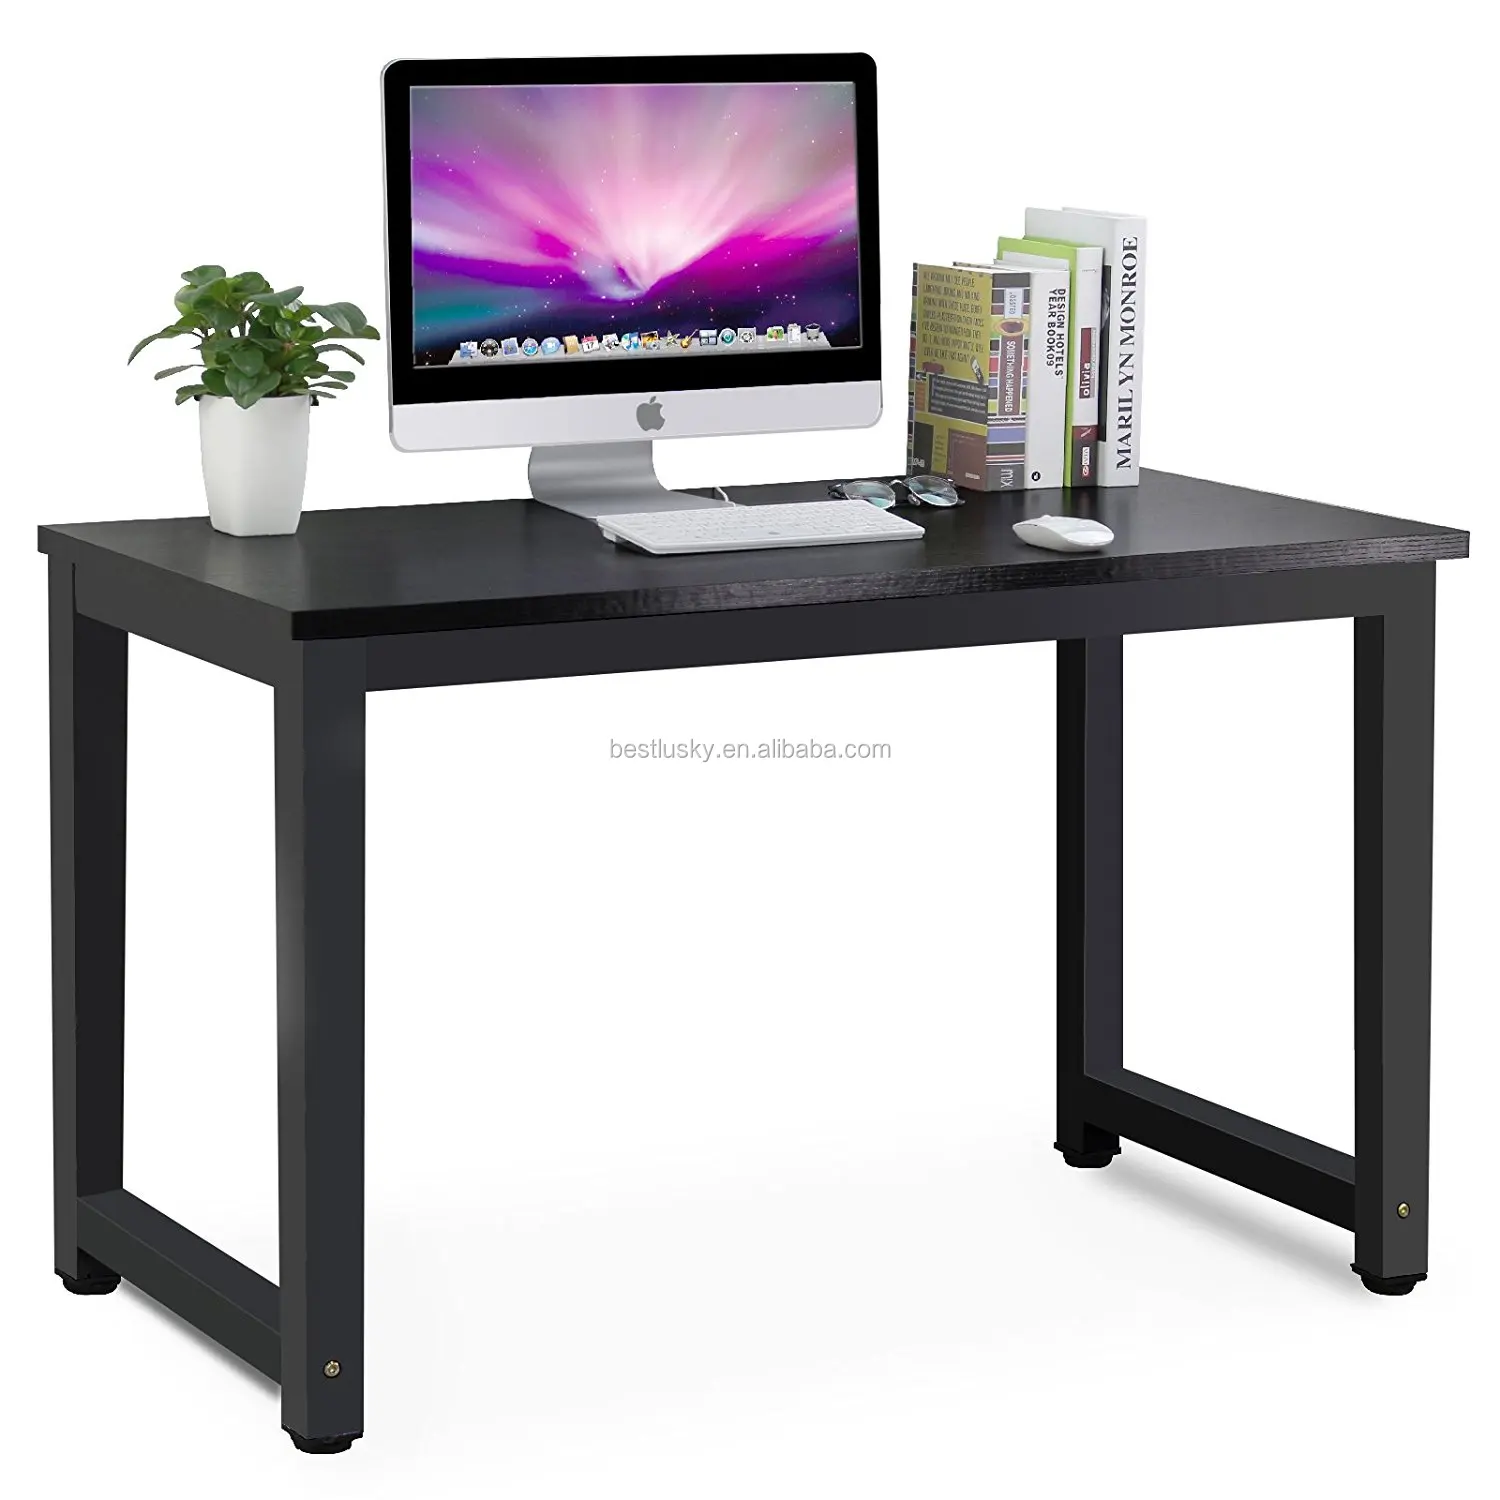 Computer Desk Simple Design Punkie